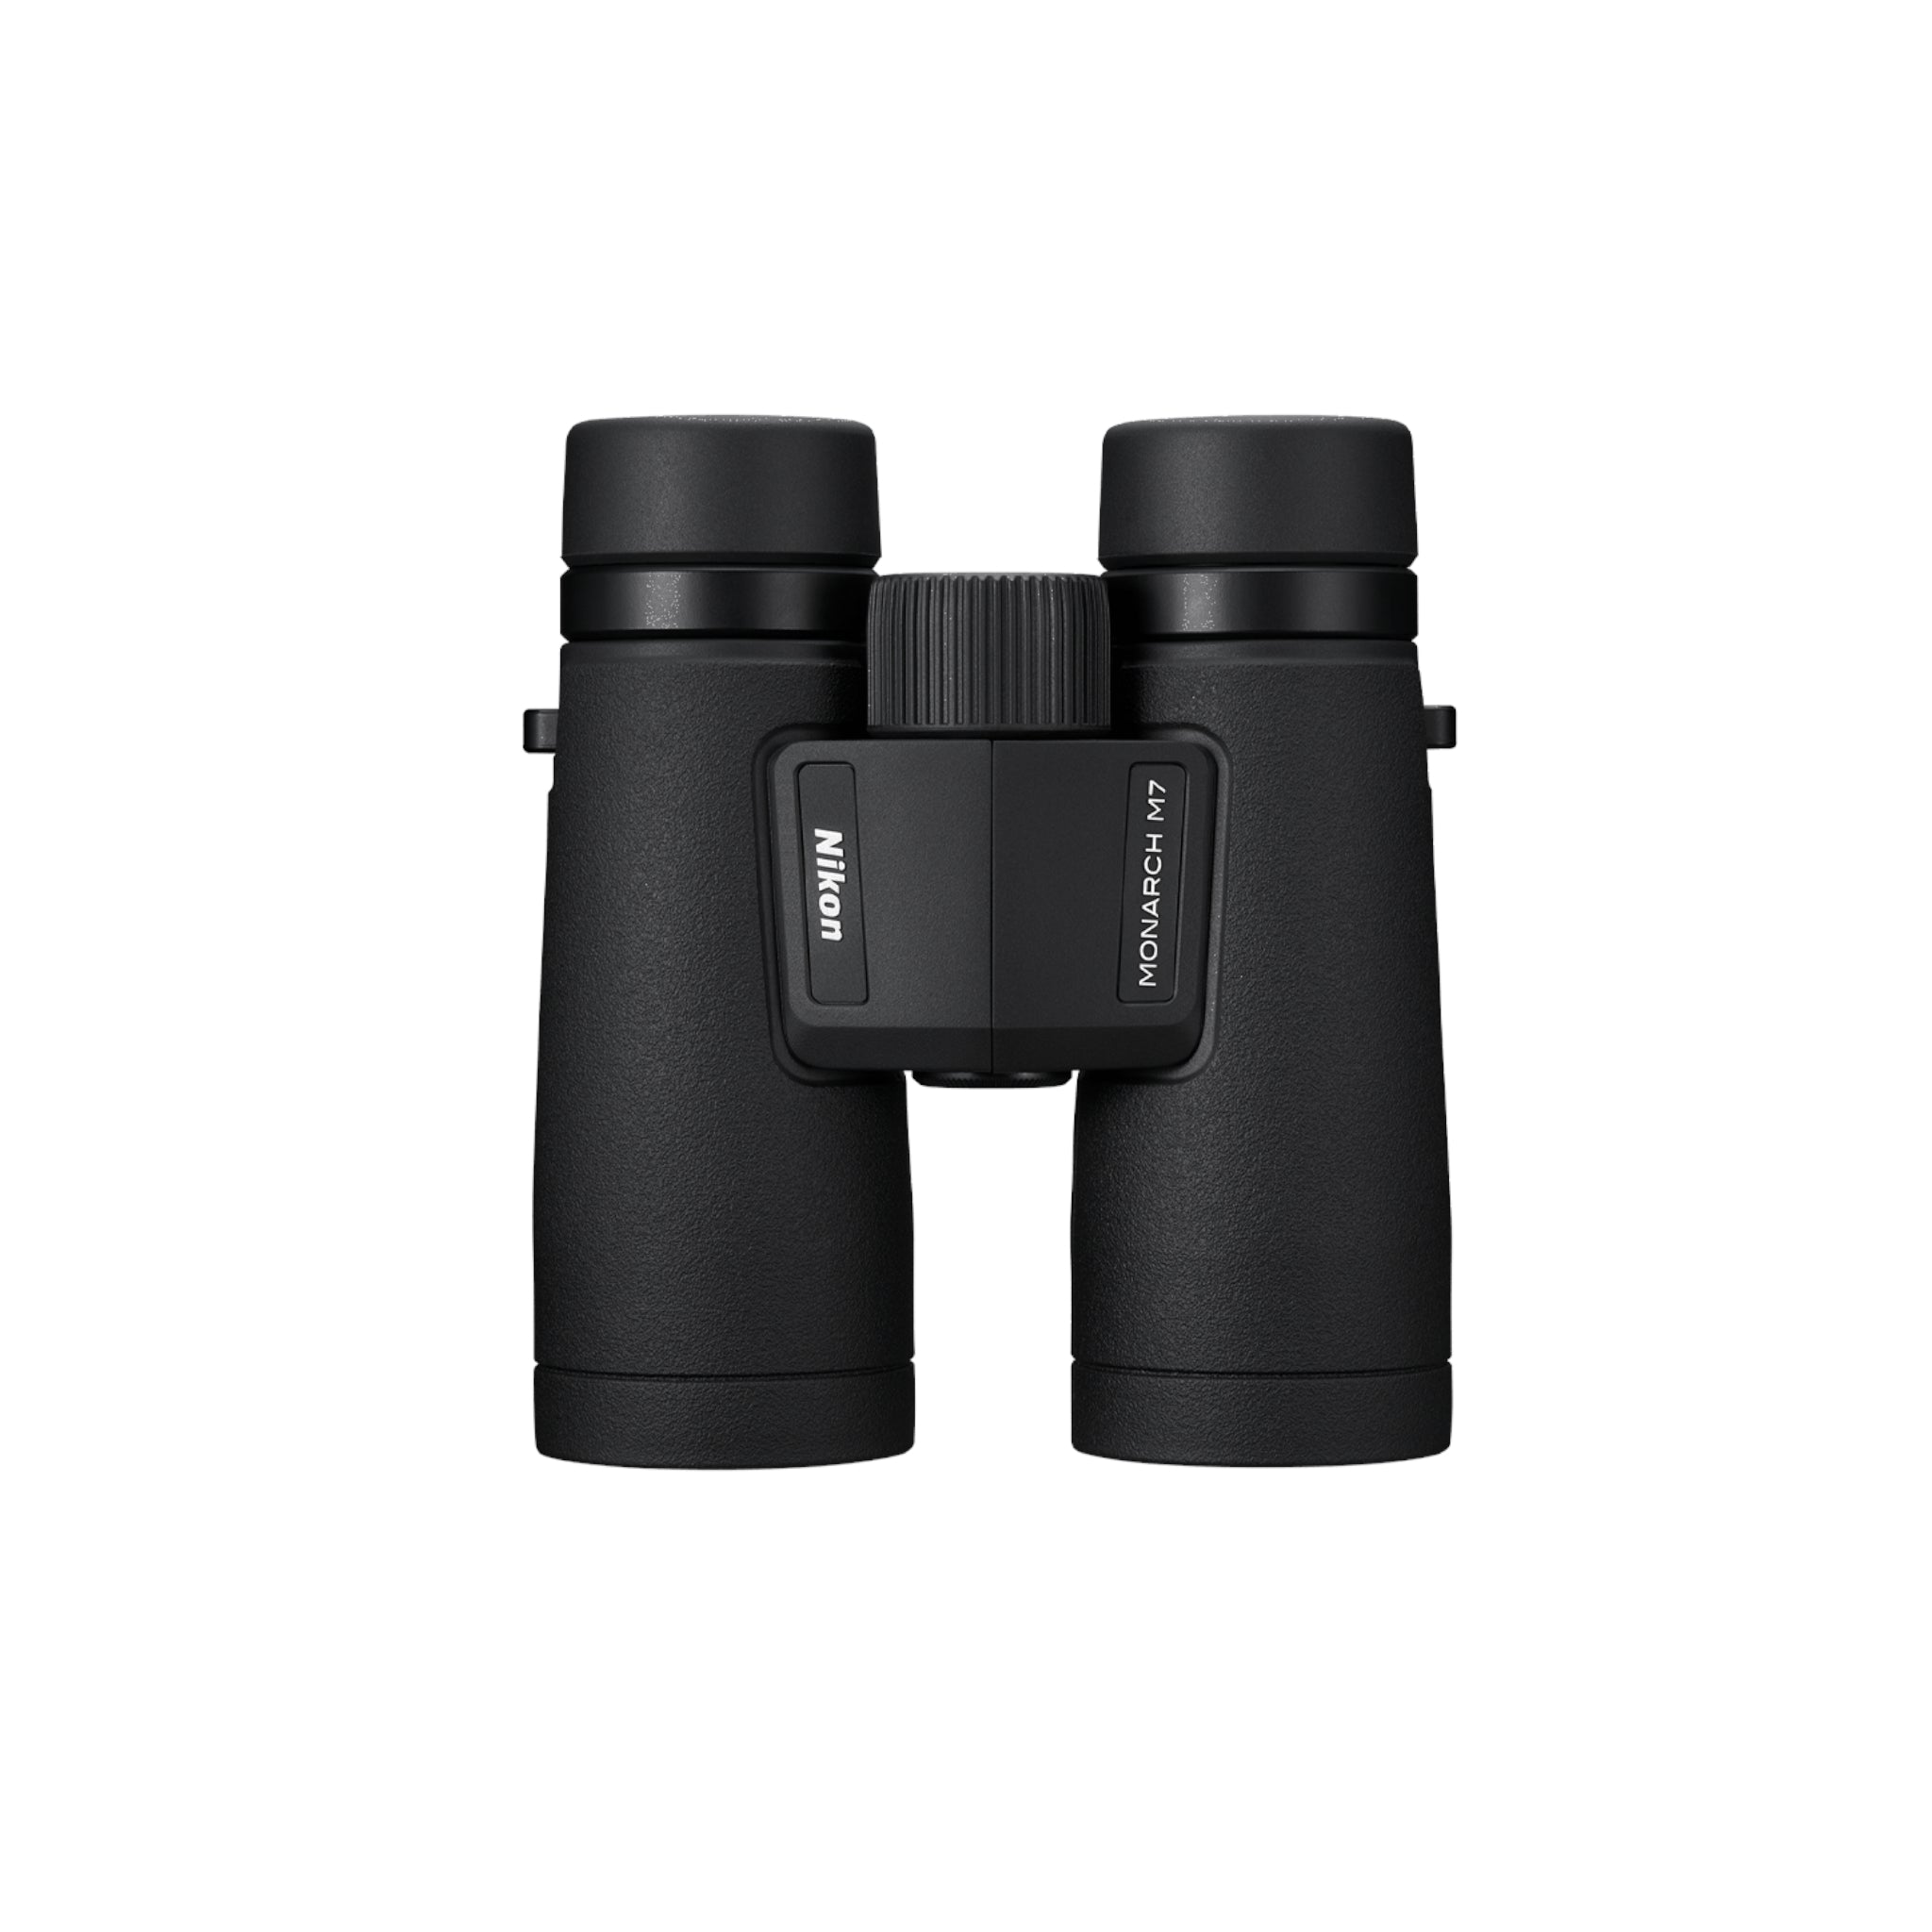 Nikon Monarch M7 10x42 Binoculars (Black)